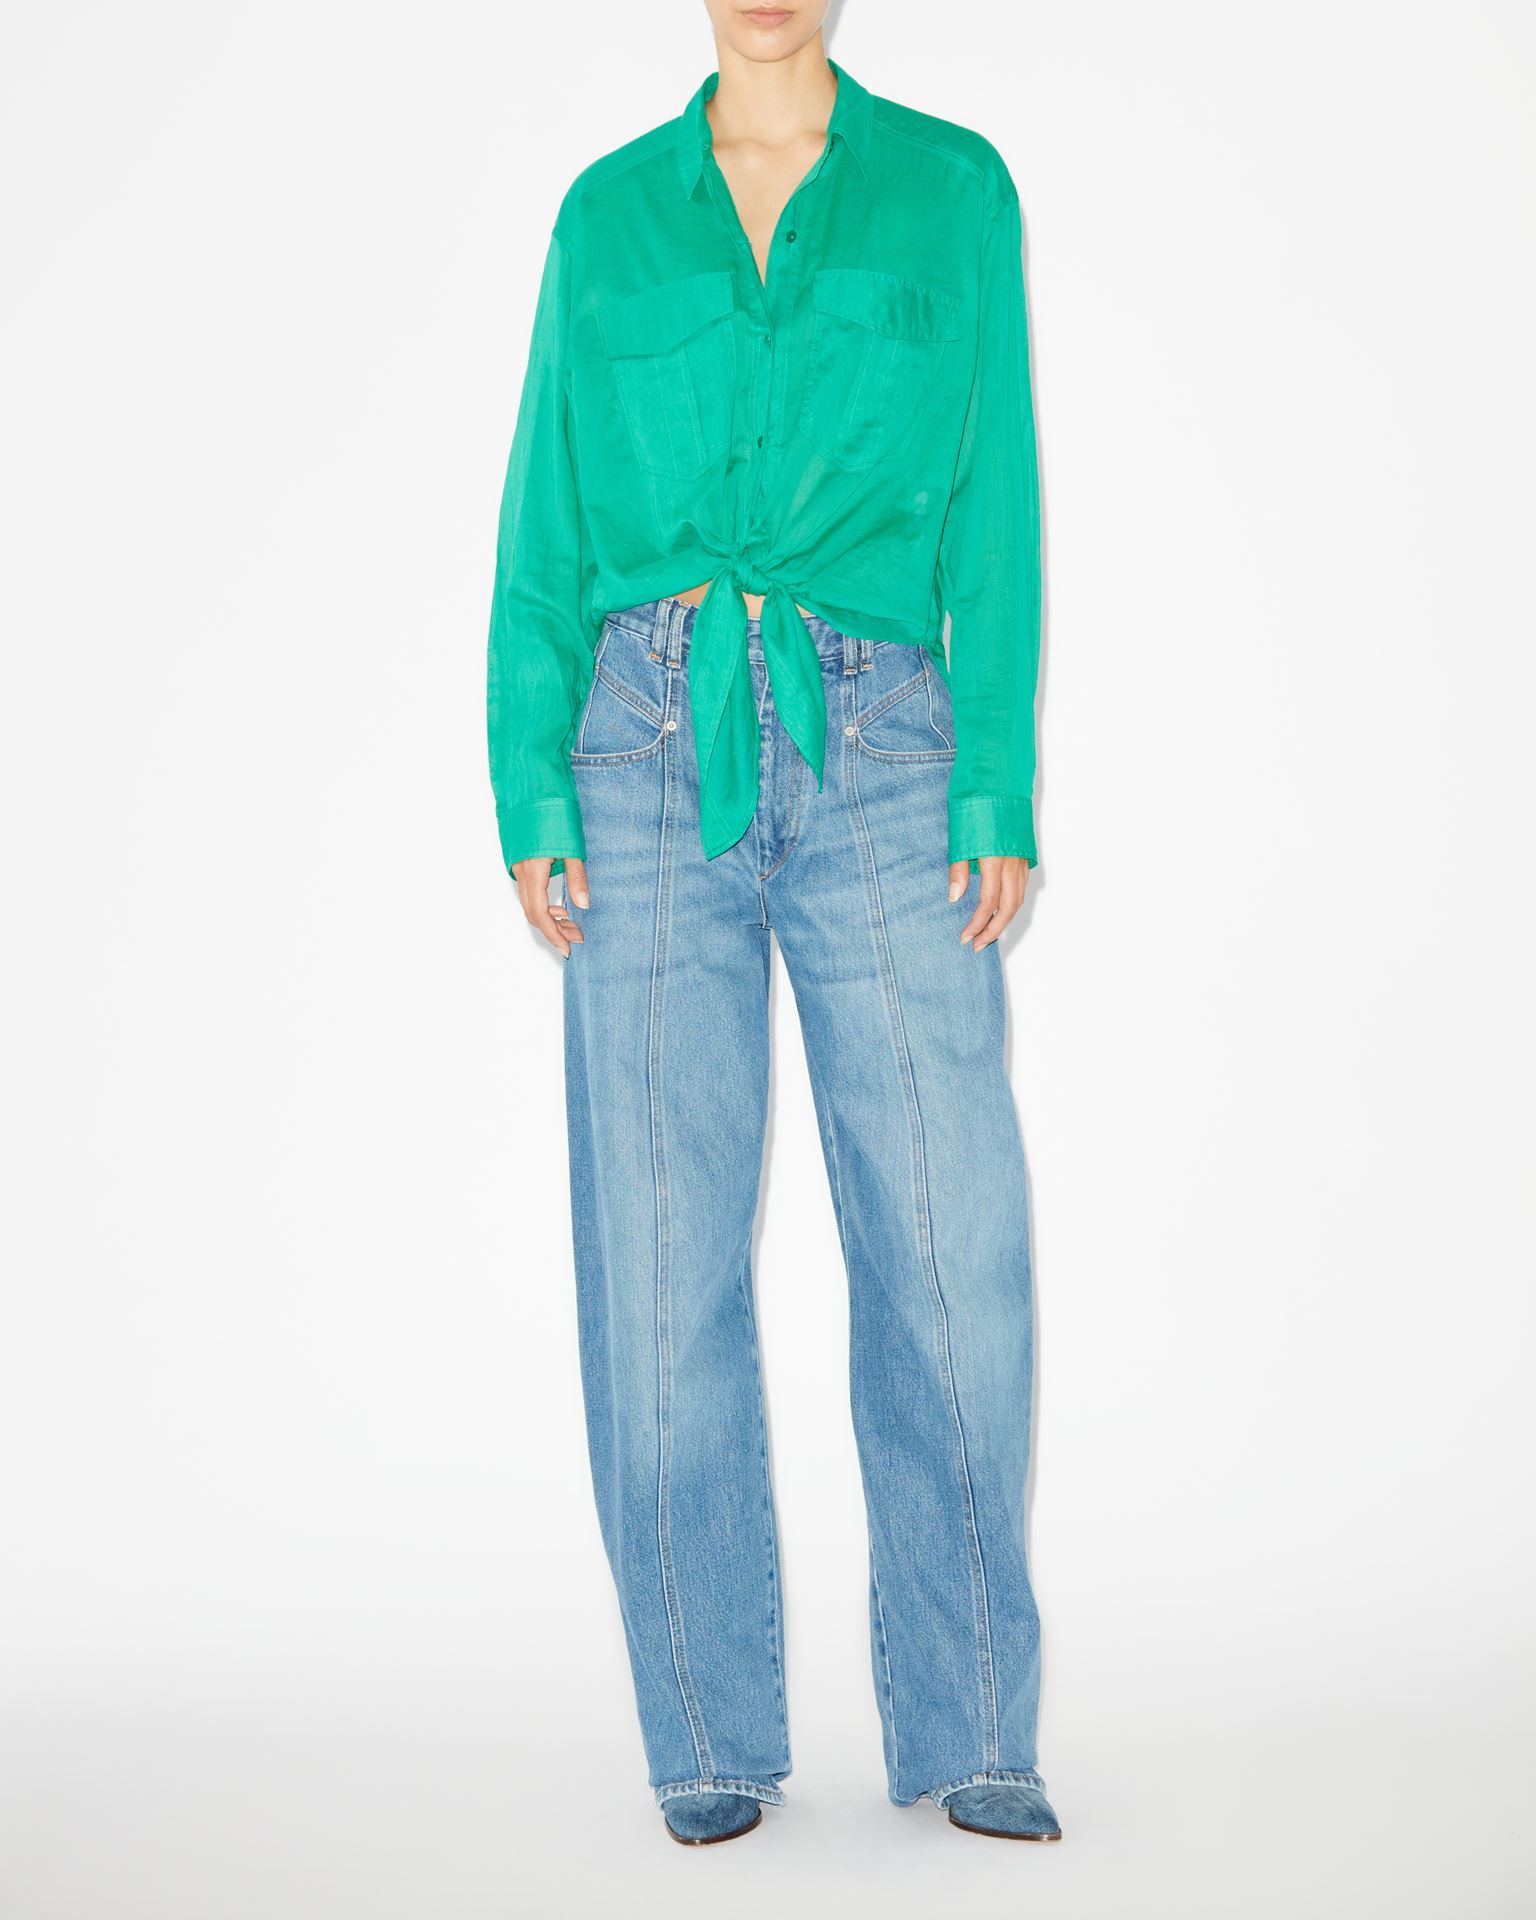 Isabel Marant Marant Étoile, Nath Shirt - Women - Green